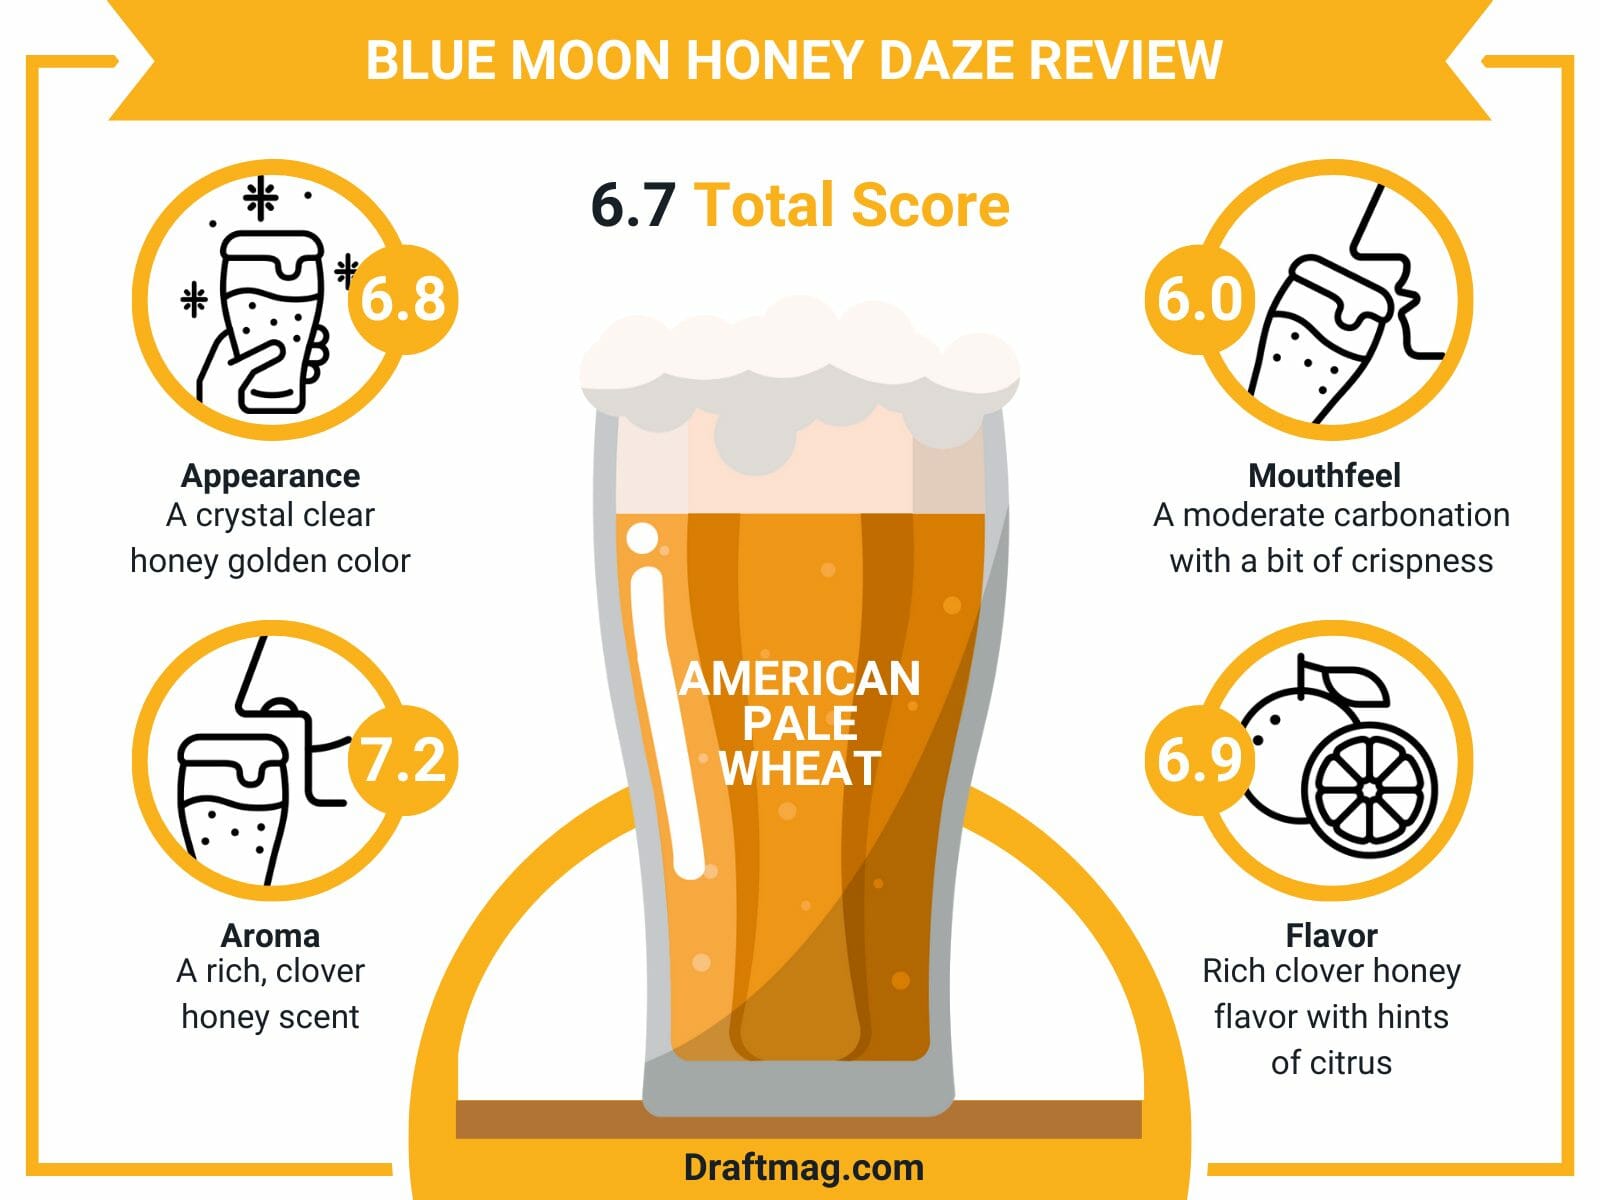 Blue Moon Honey Daze Review Infographic